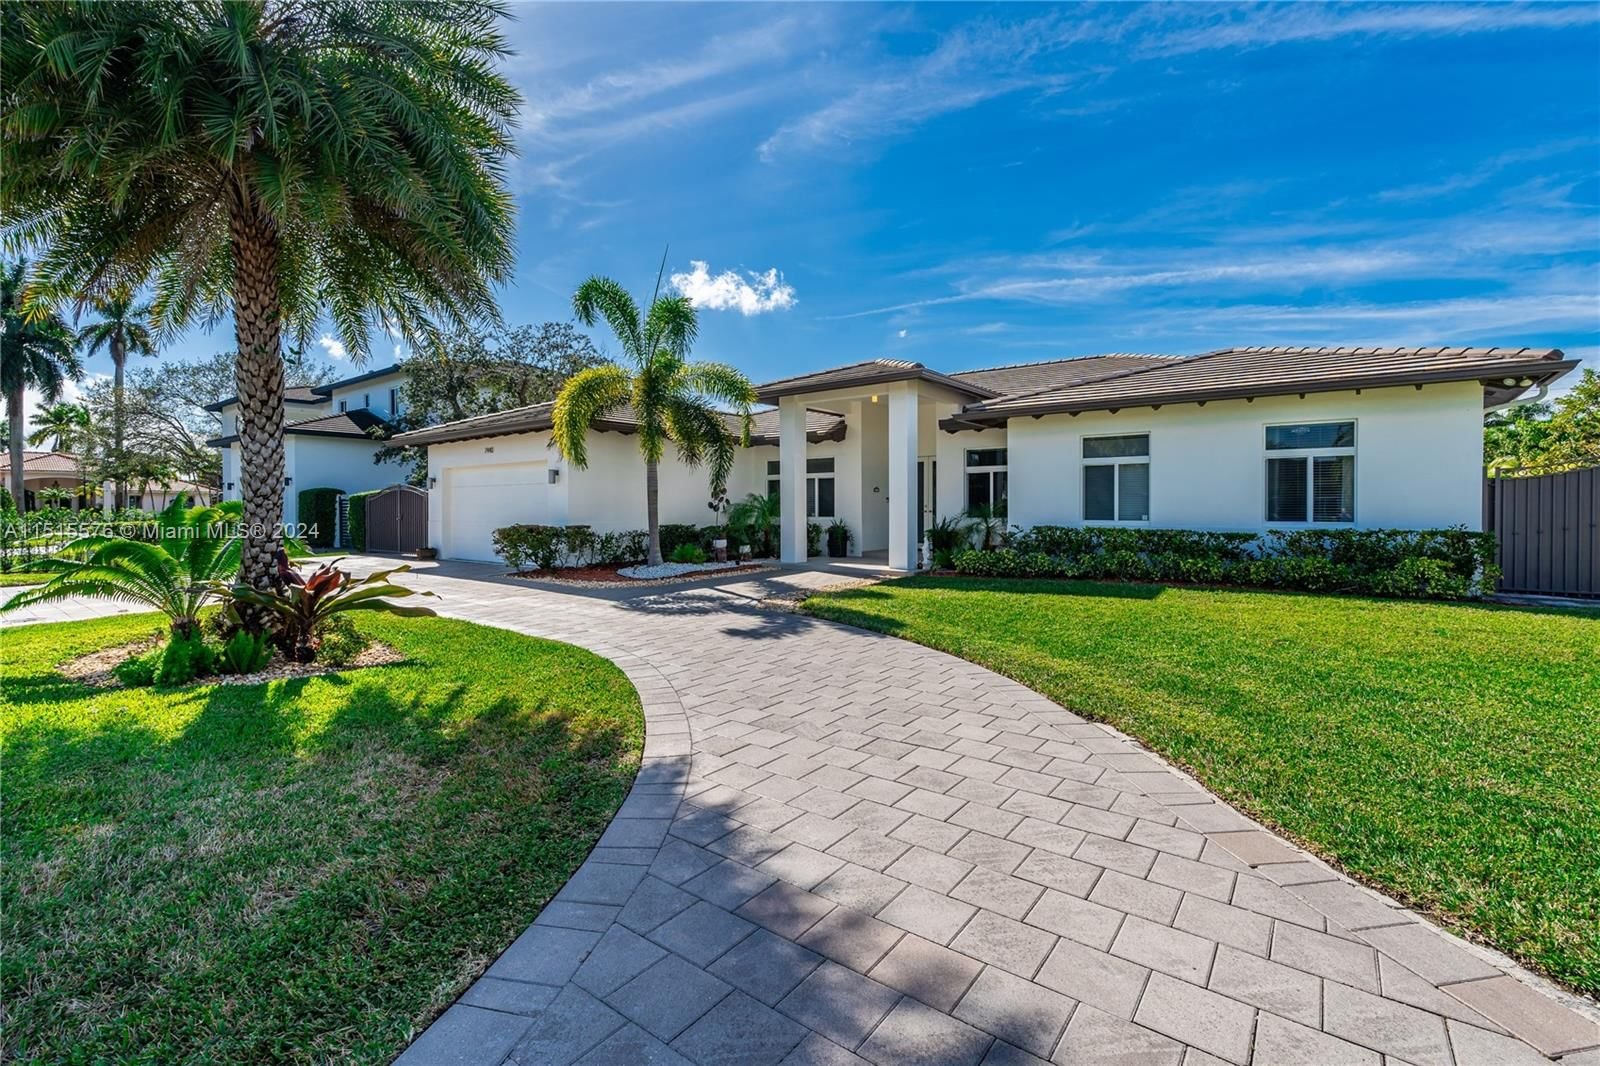 Real estate property located at 7440 124th Ct, Miami-Dade County, RED BERRY ESTATES, Miami, FL